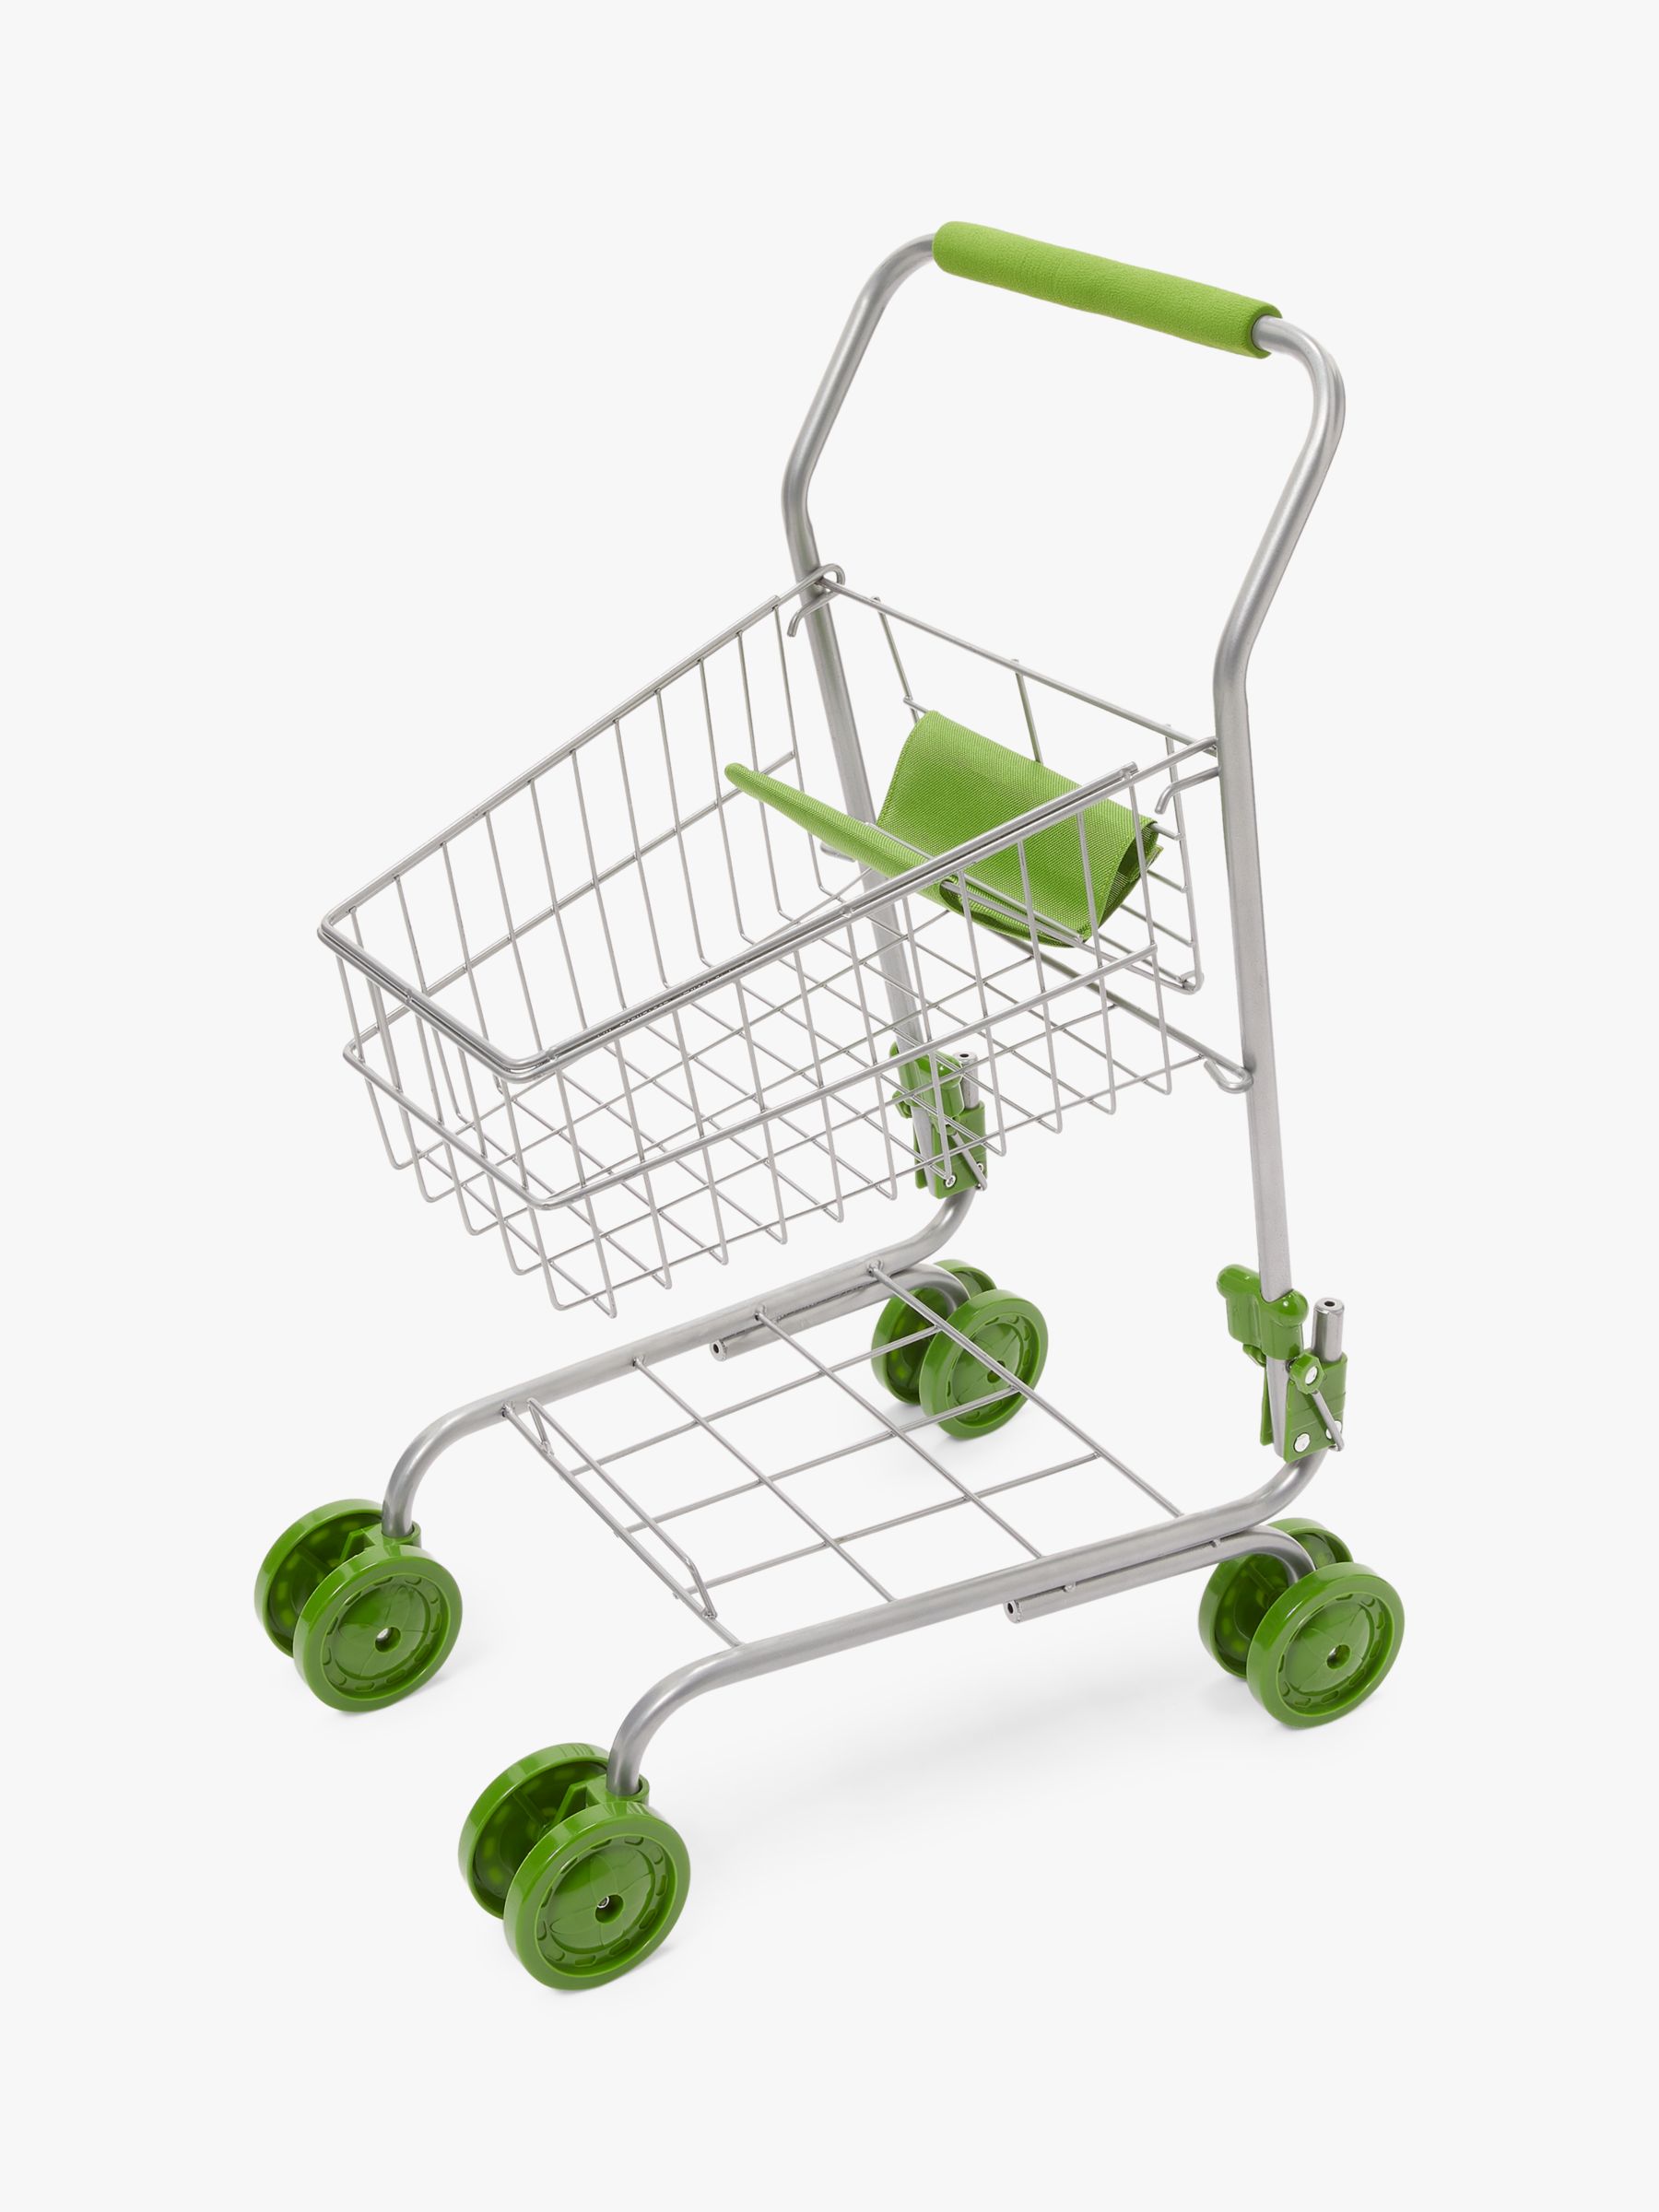 toy supermarket trolley